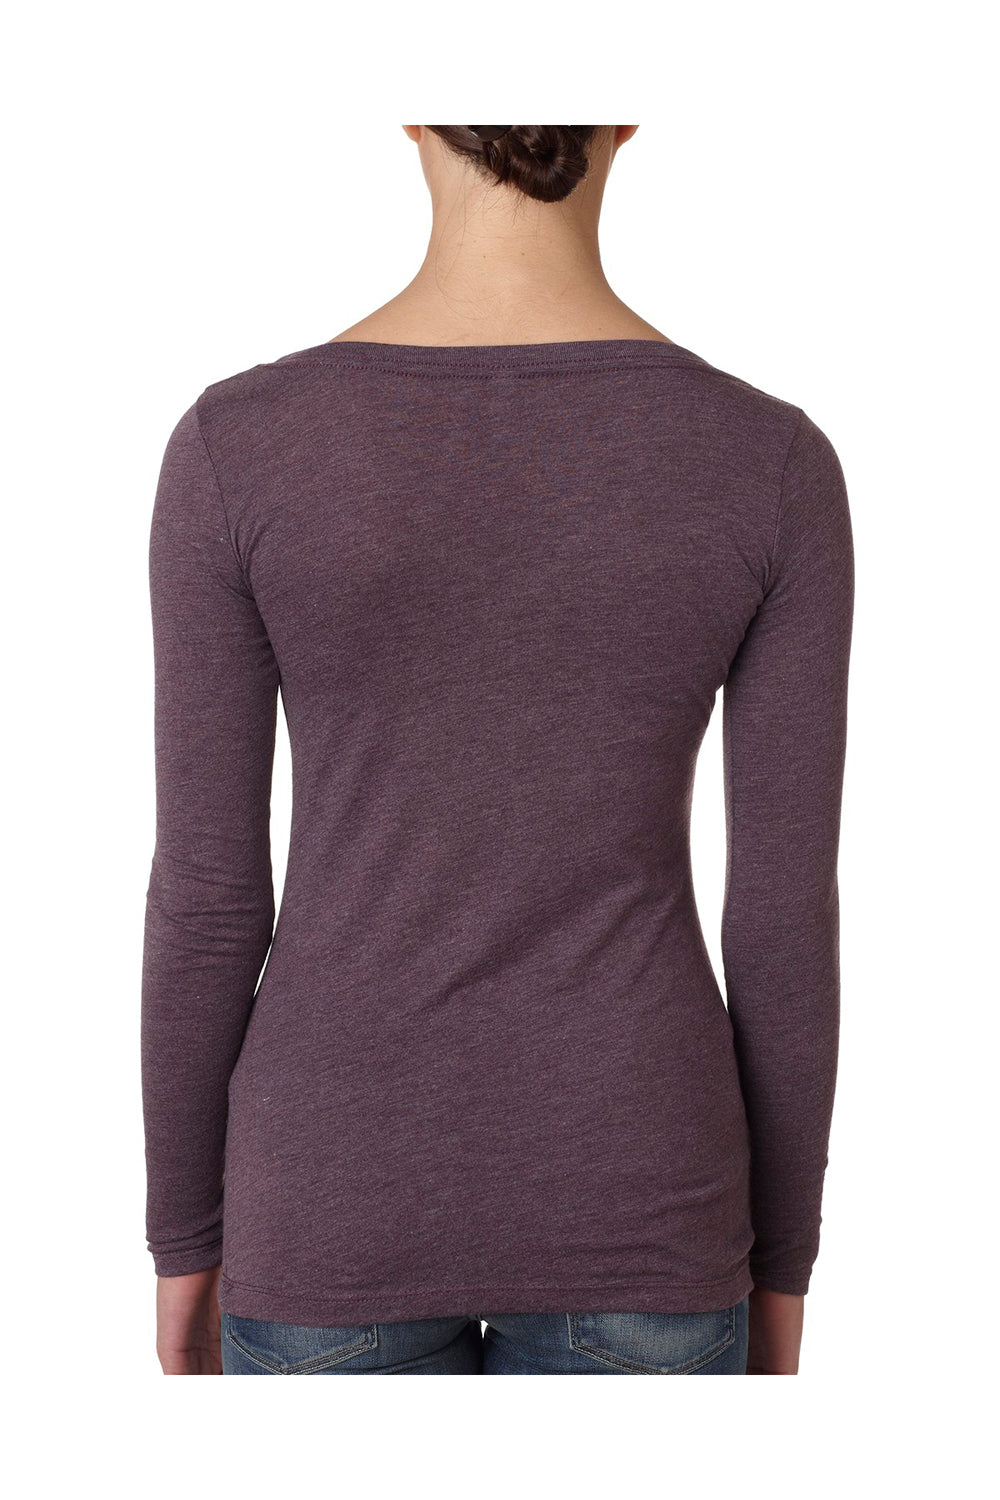 Next Level 6731 Womens Jersey Long Sleeve Scoop Neck T-Shirt Purple Back